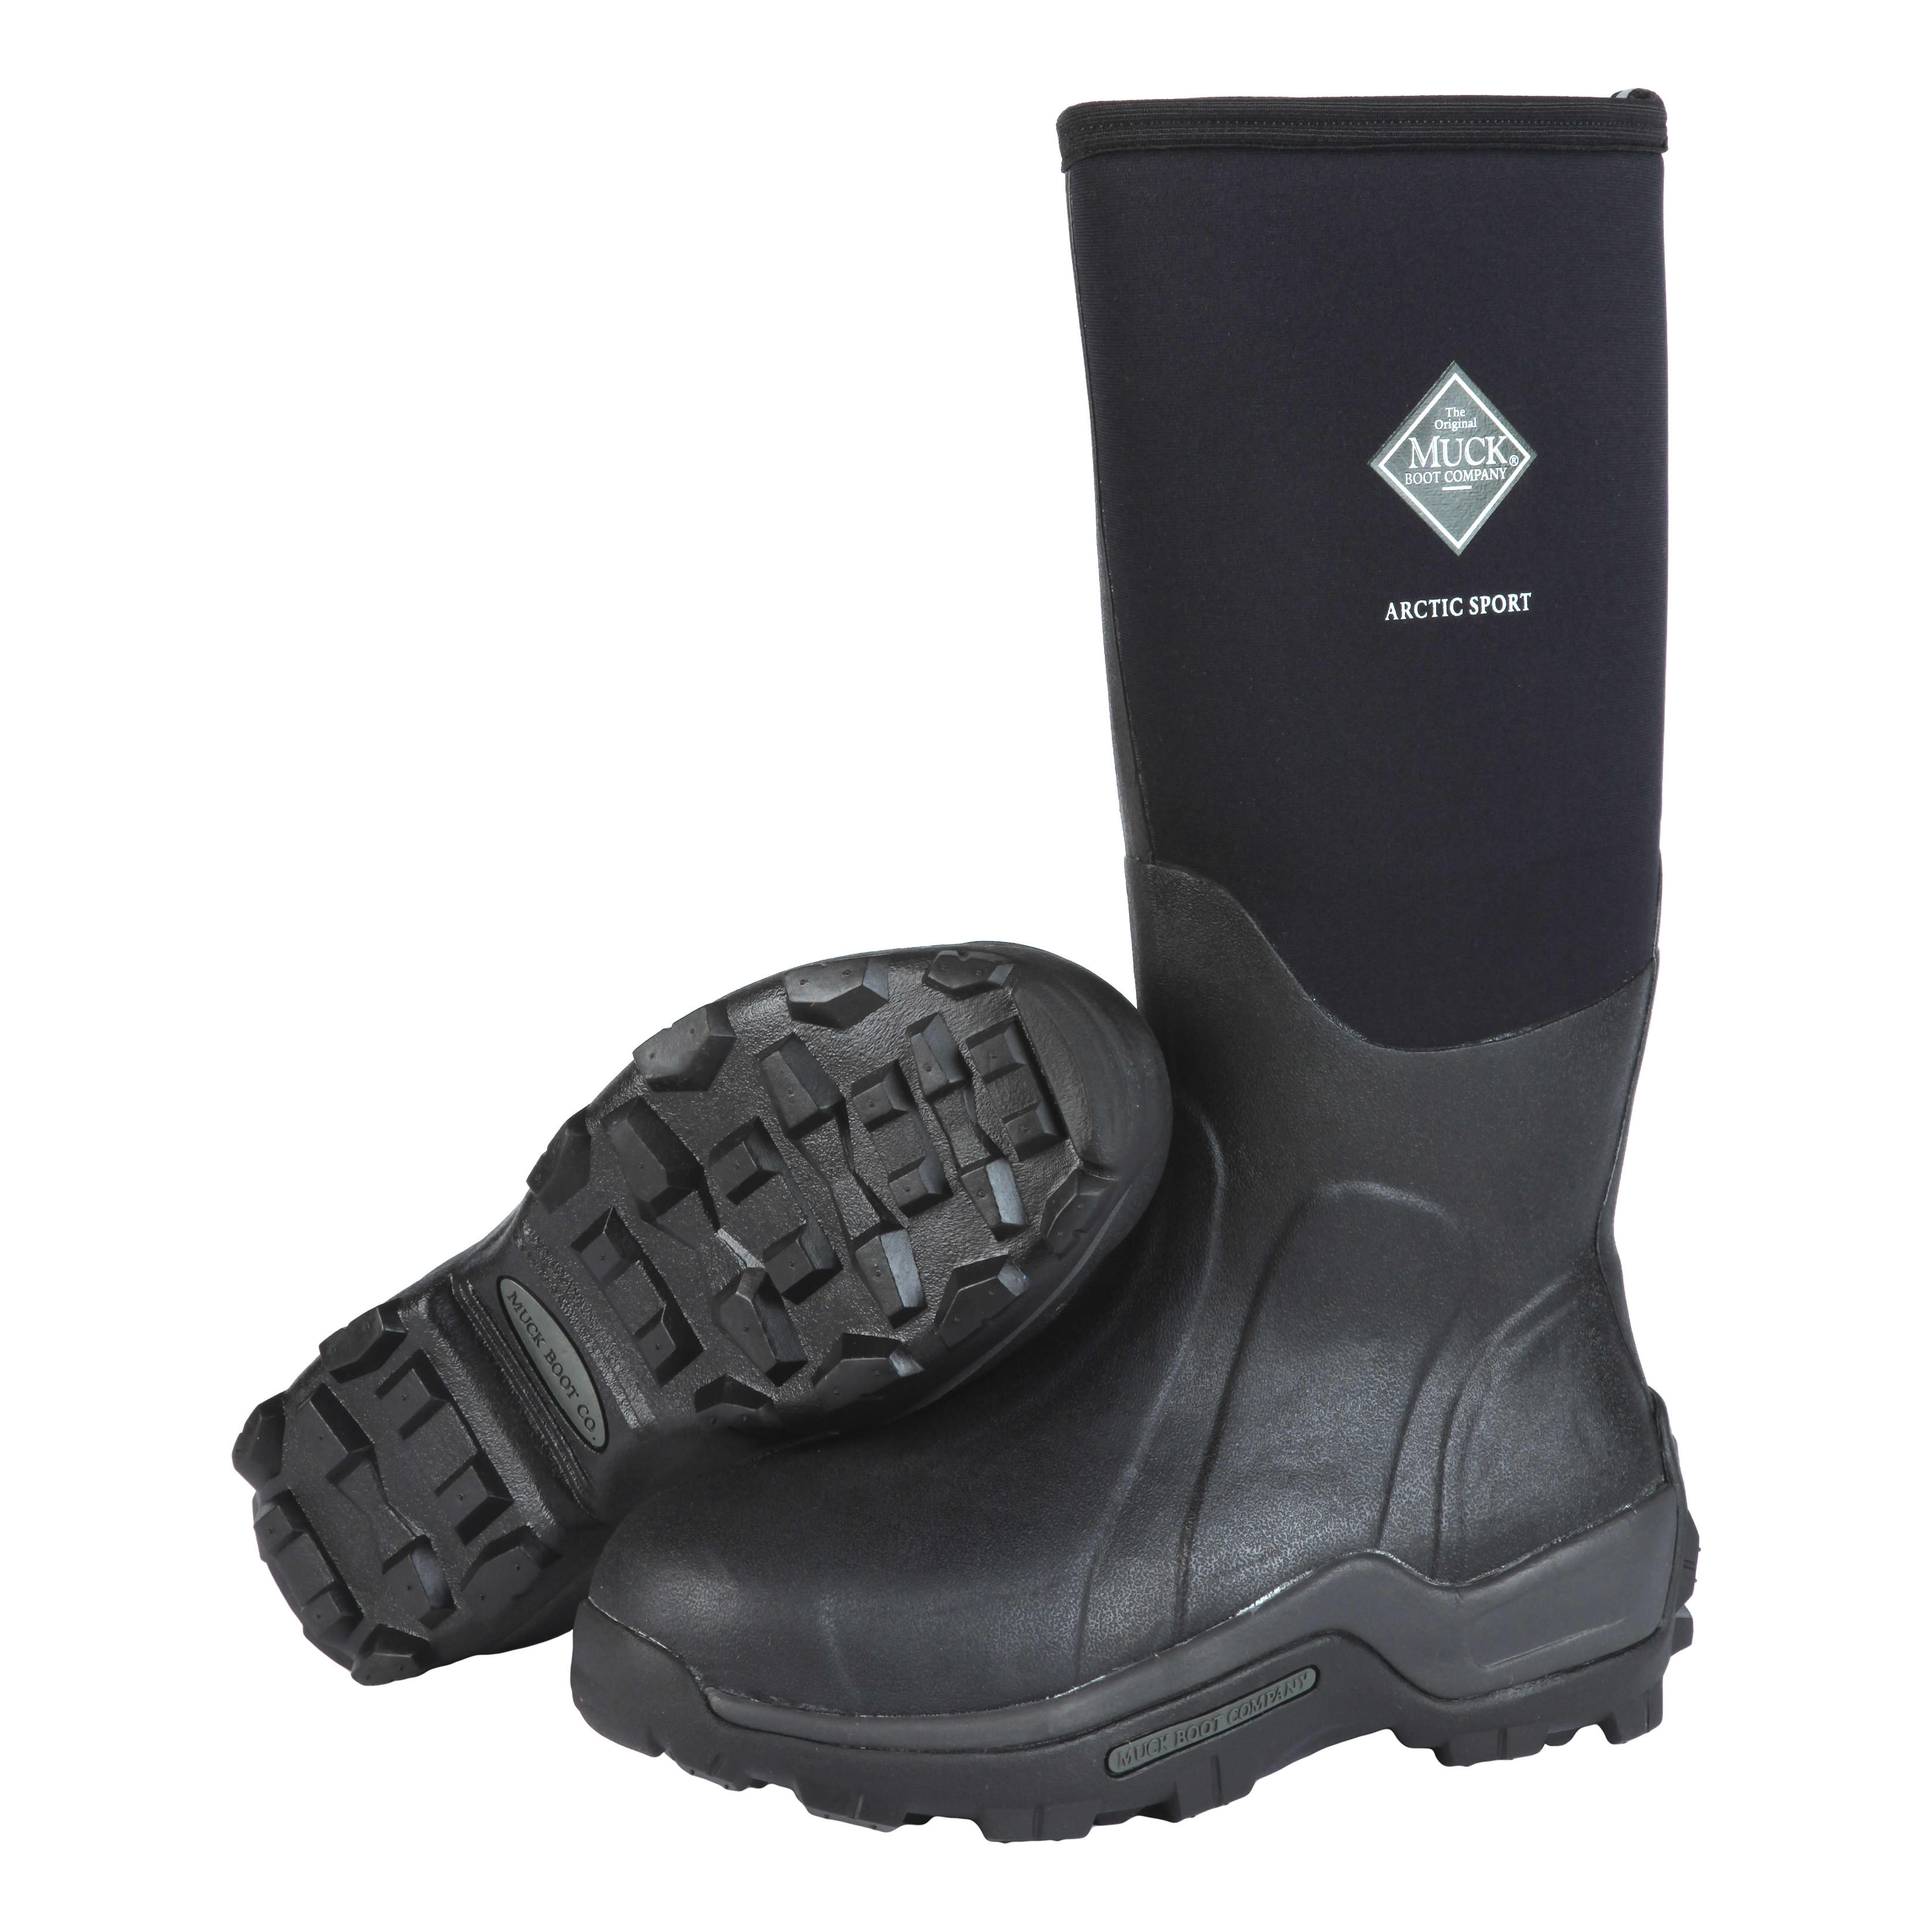 Muck Men's Arctic Sport Tall Boots - Black 7